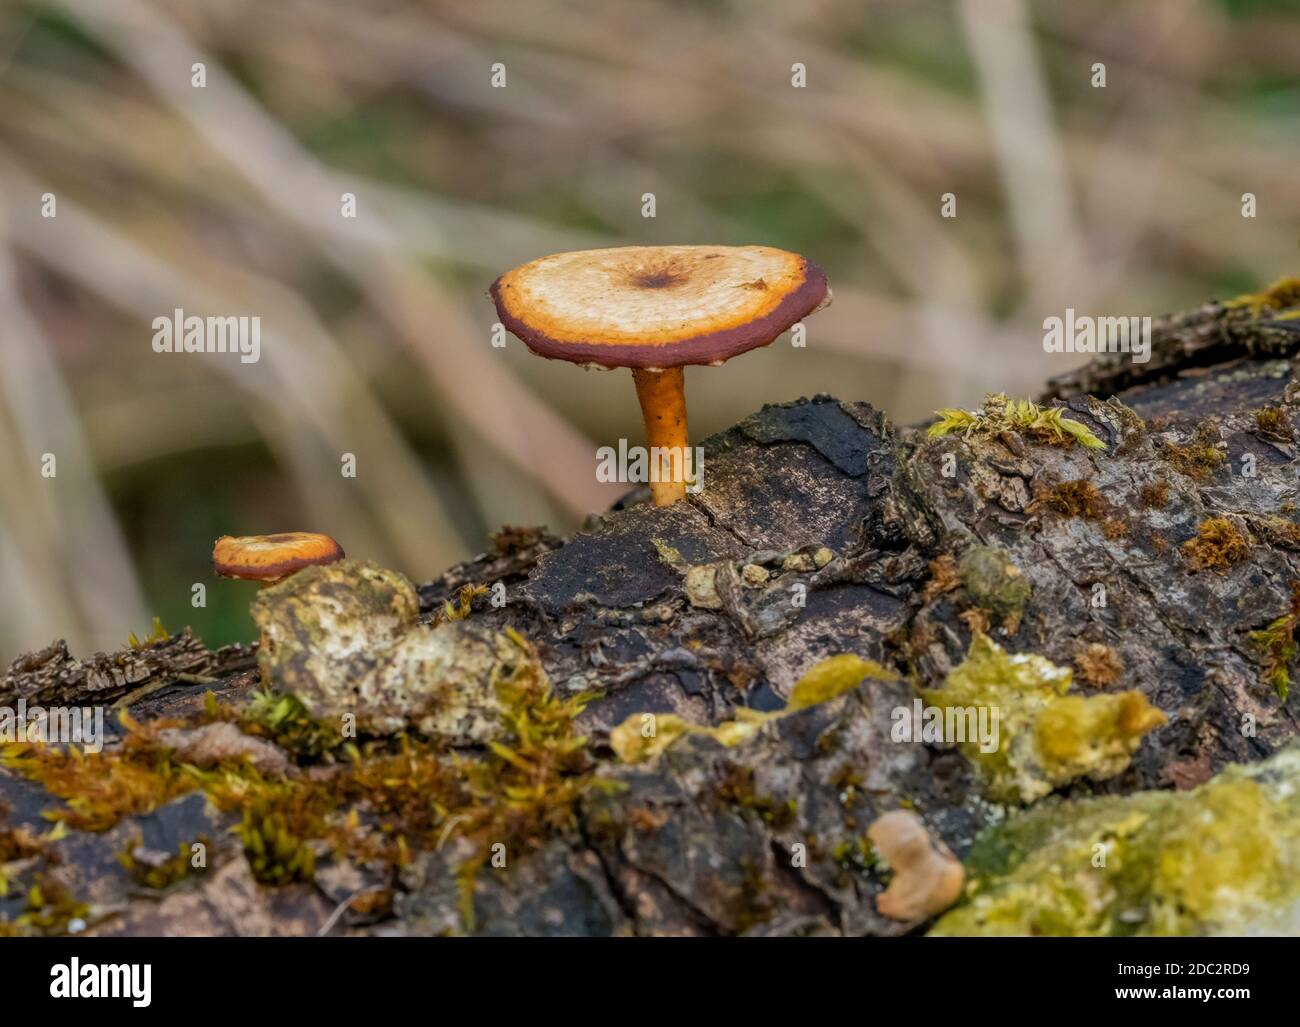 closeup shot of natural fungi growing on a tree trunk Stock Photo